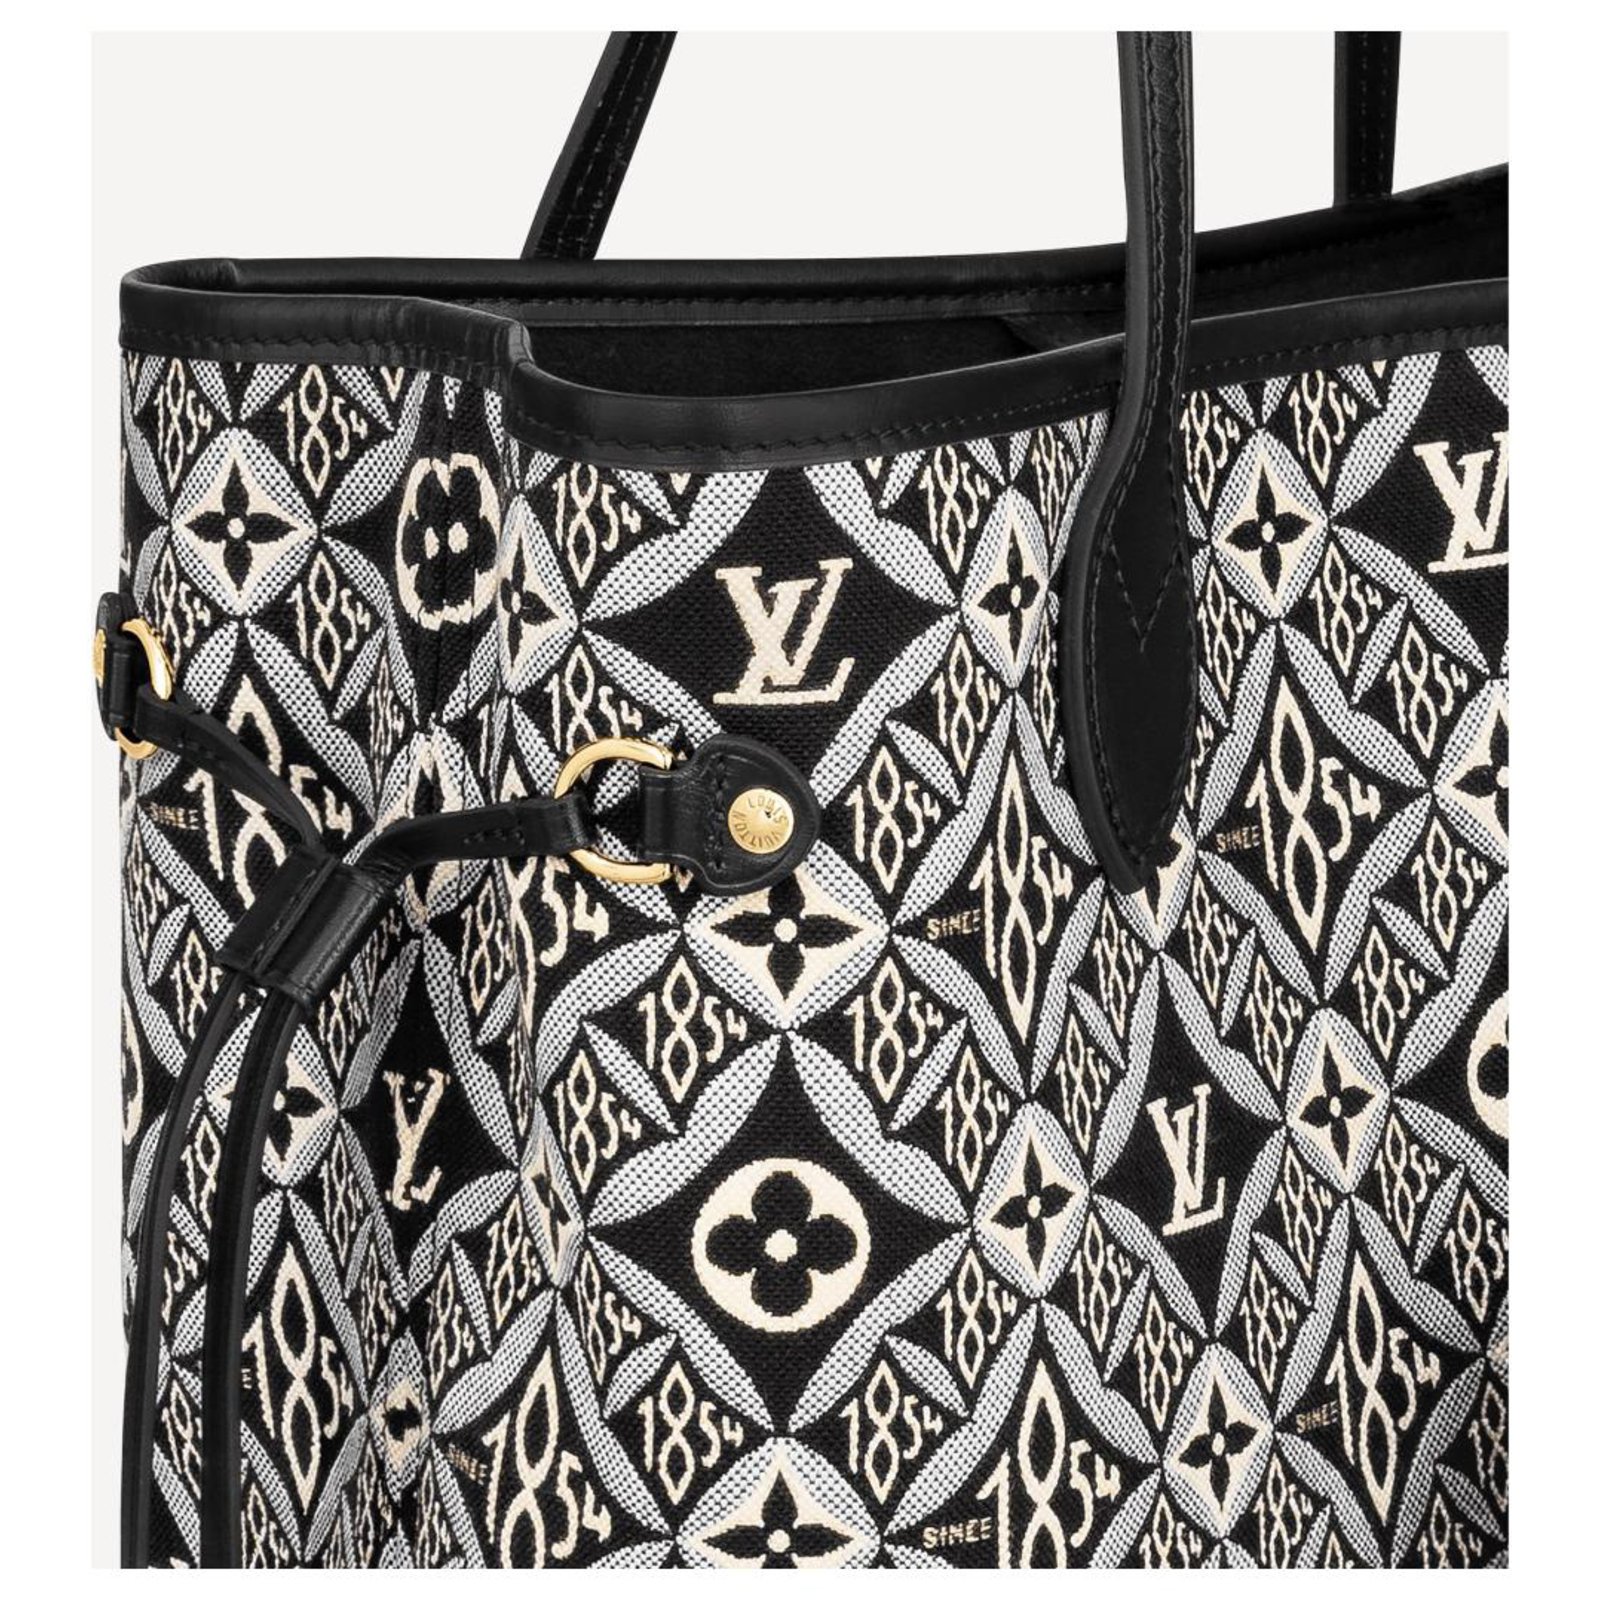 Louis Vuitton Since 1854 Neverfull mm Jacquard Shoulder Bag Grey